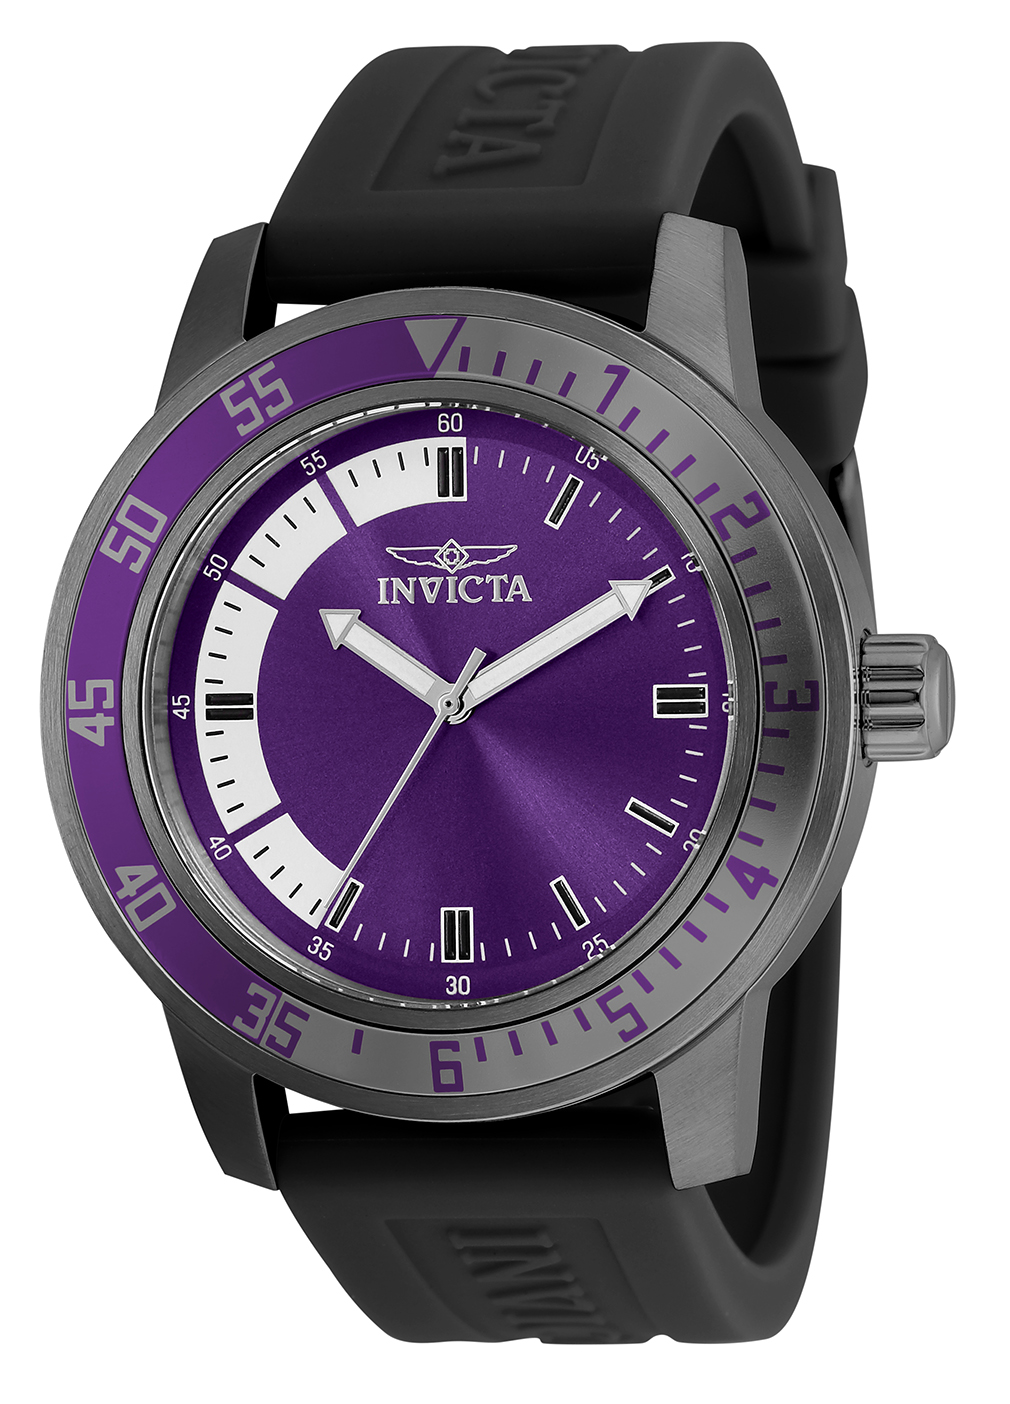 Invicta Specialty Men's Watch - 45mm, Black (35780)